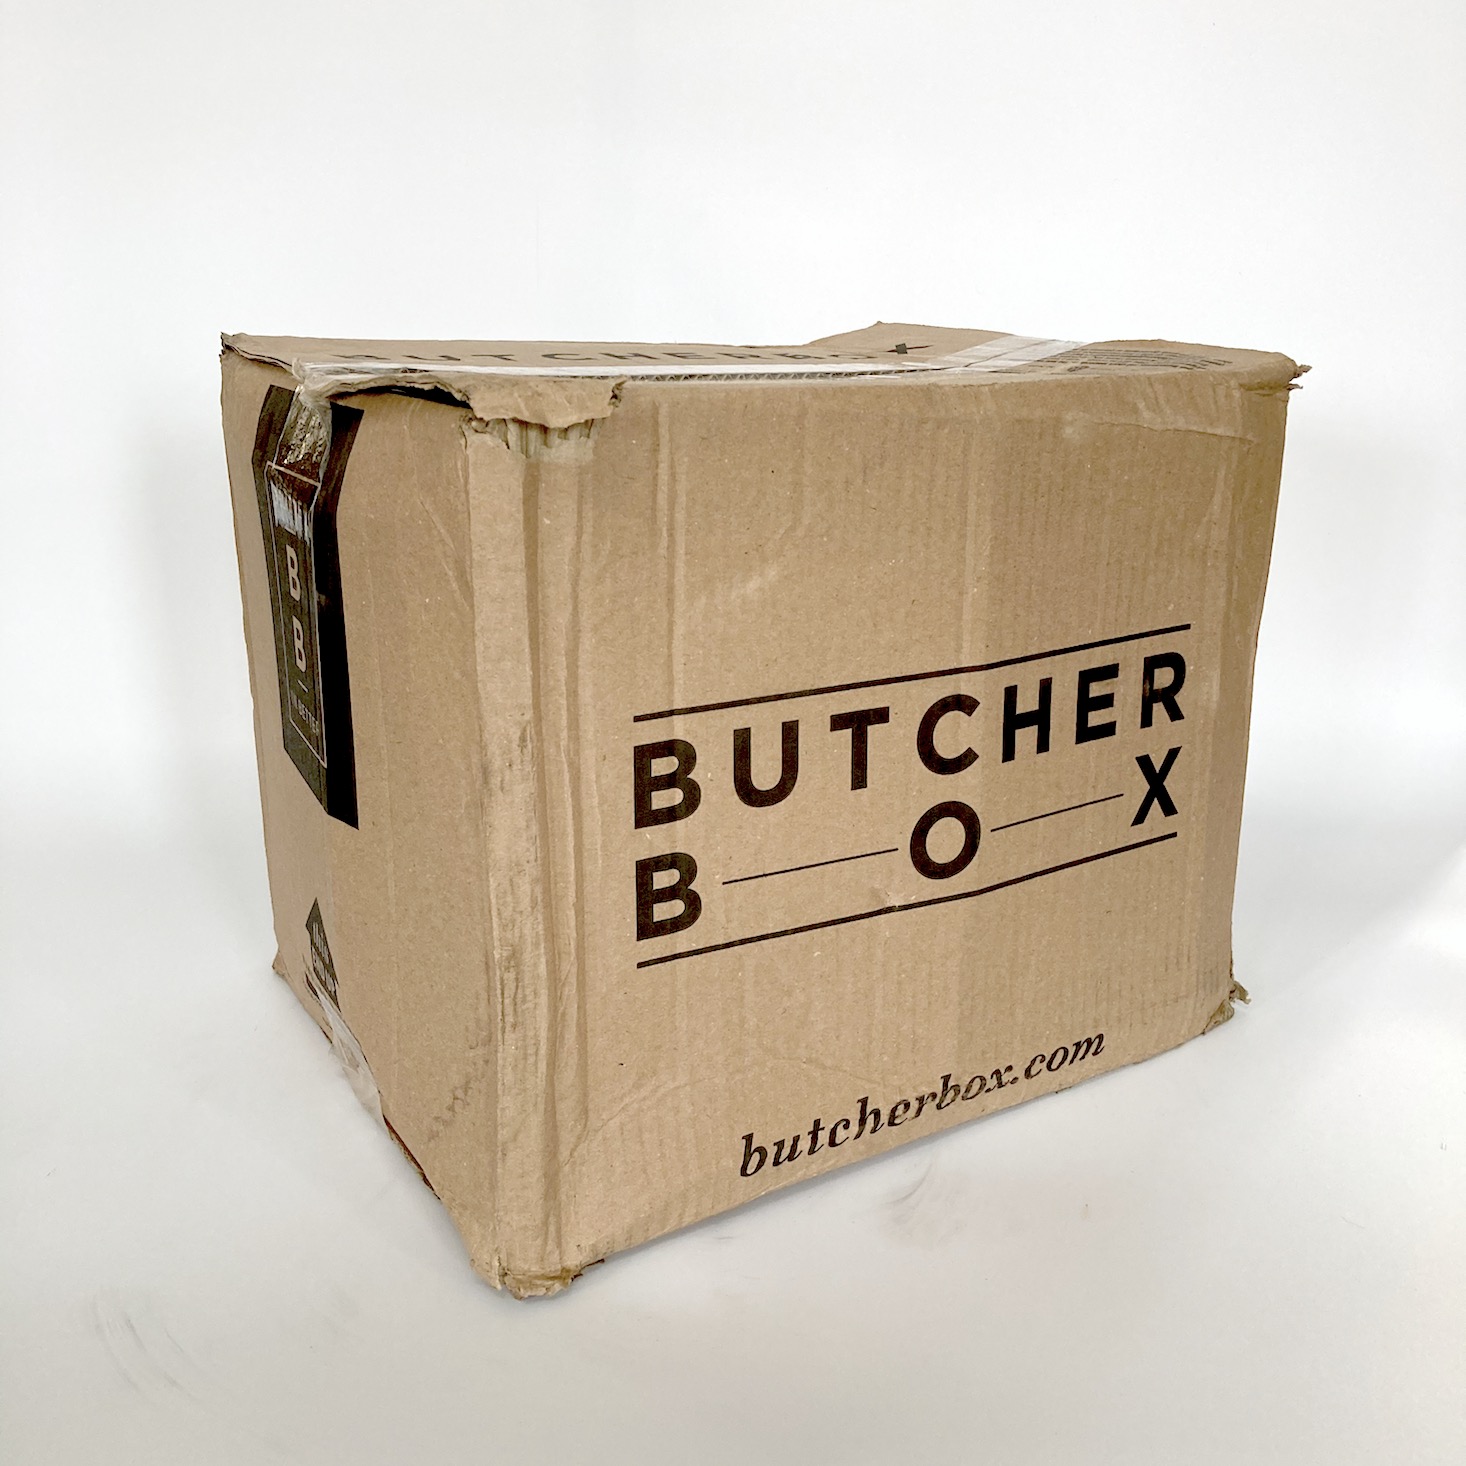 ButcherBox Review: Pros, Cons, & Best Alternatives